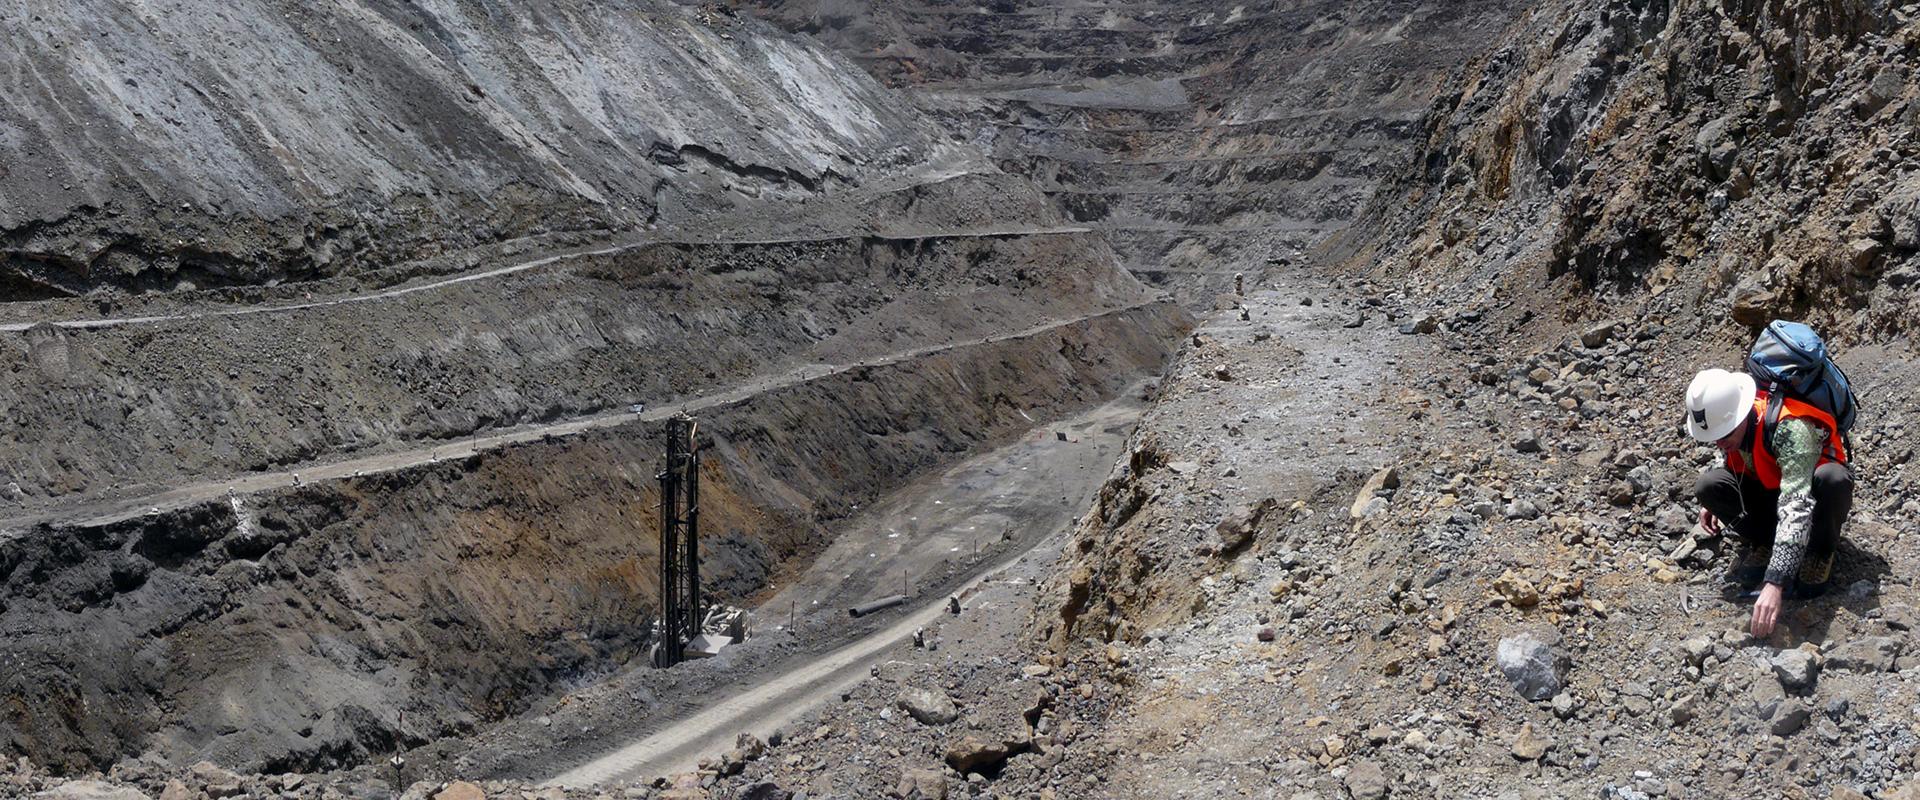 Sampling Pb-Zn-Ag ore, Peru